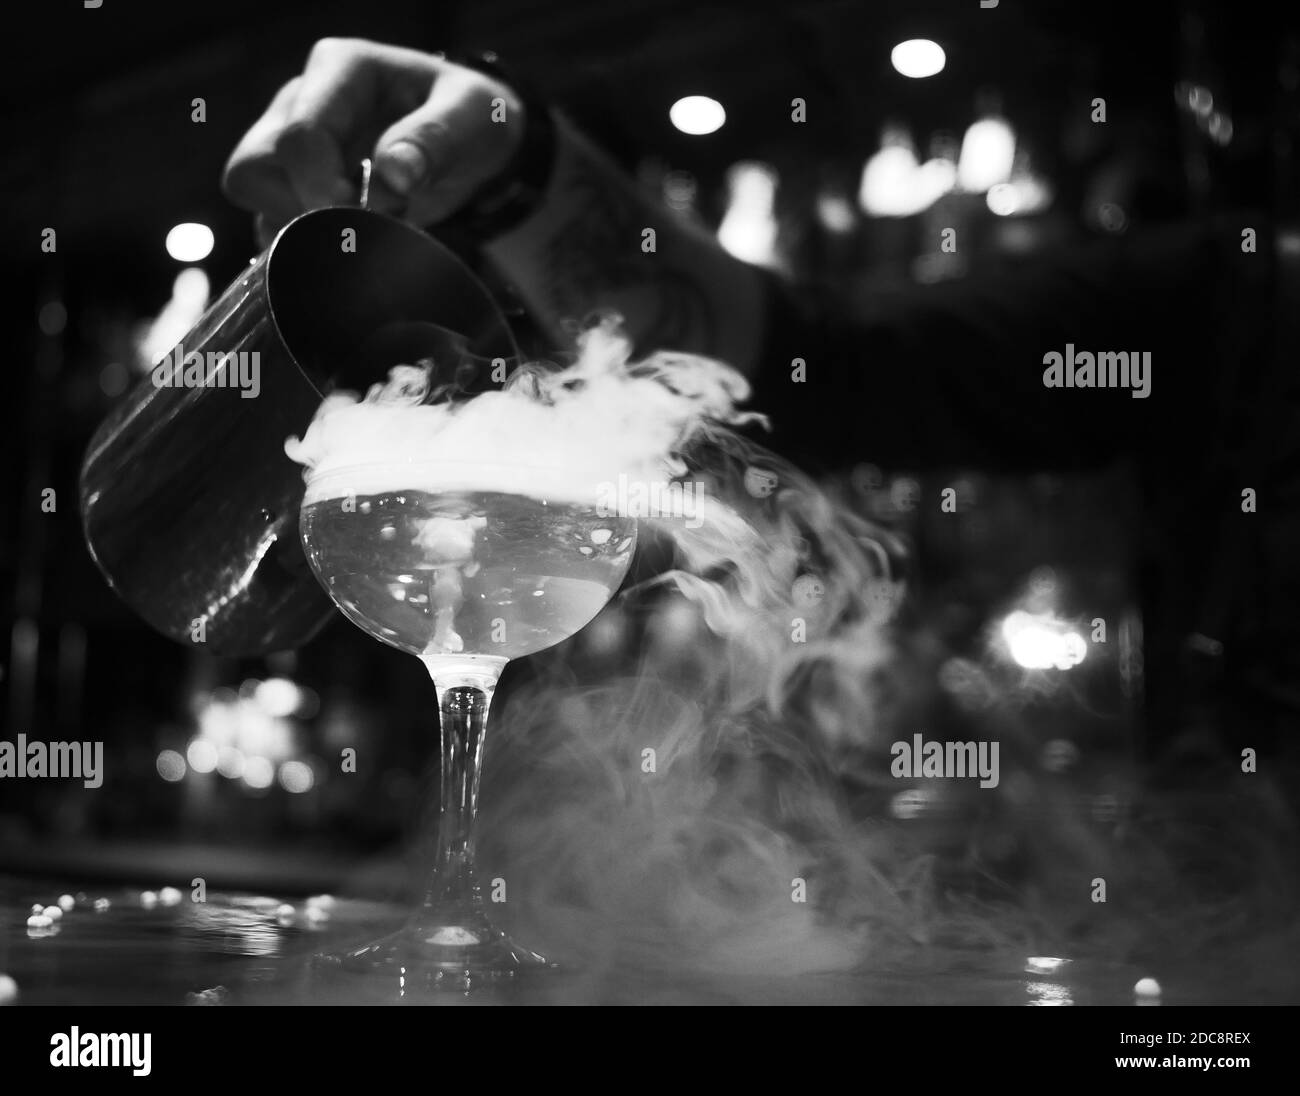 Cocktail masterclass using dry ice Stock Photo